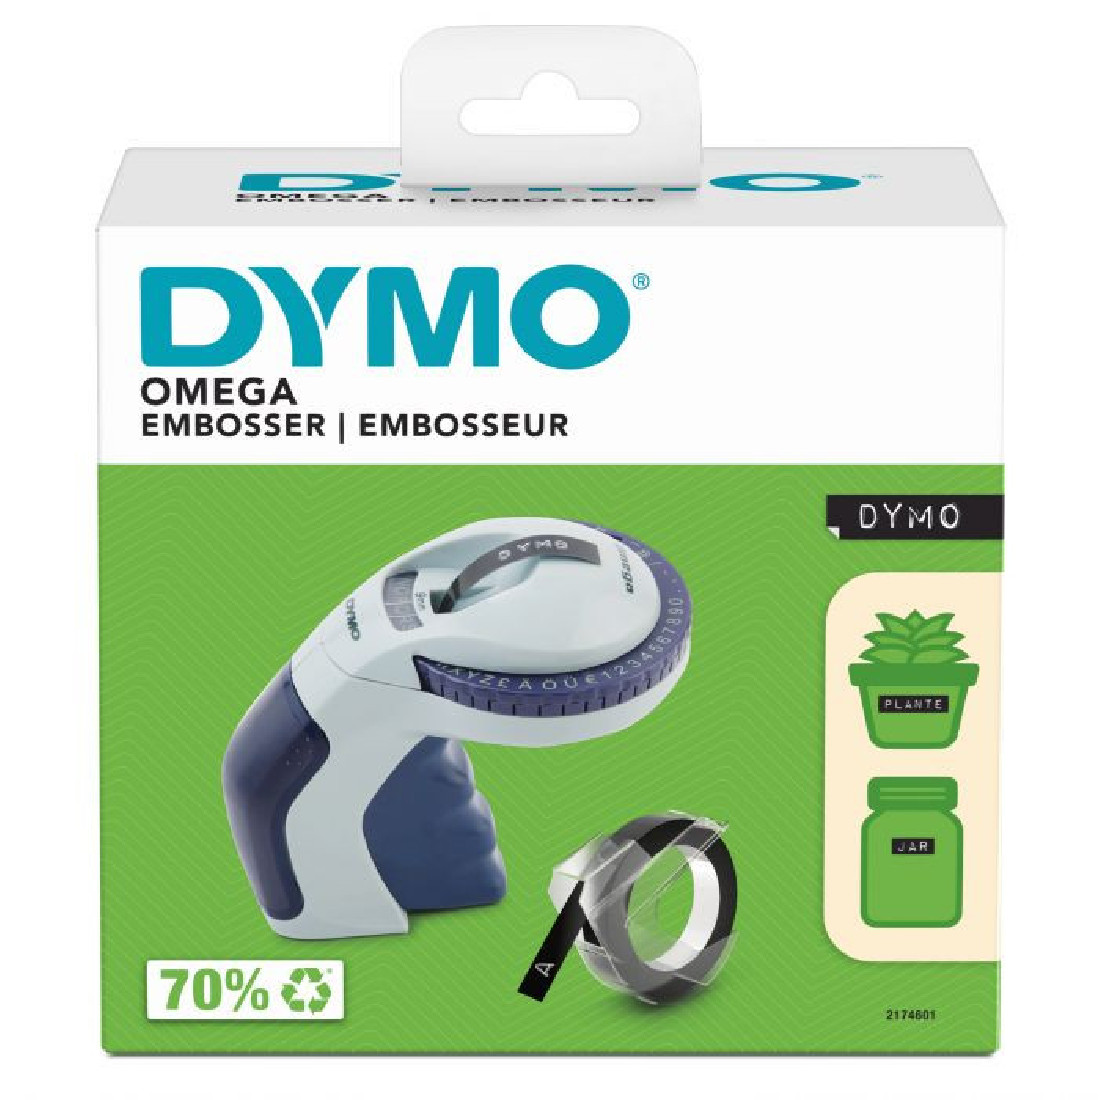 Dymo Emposser 2174601 Omega Blue/Grey